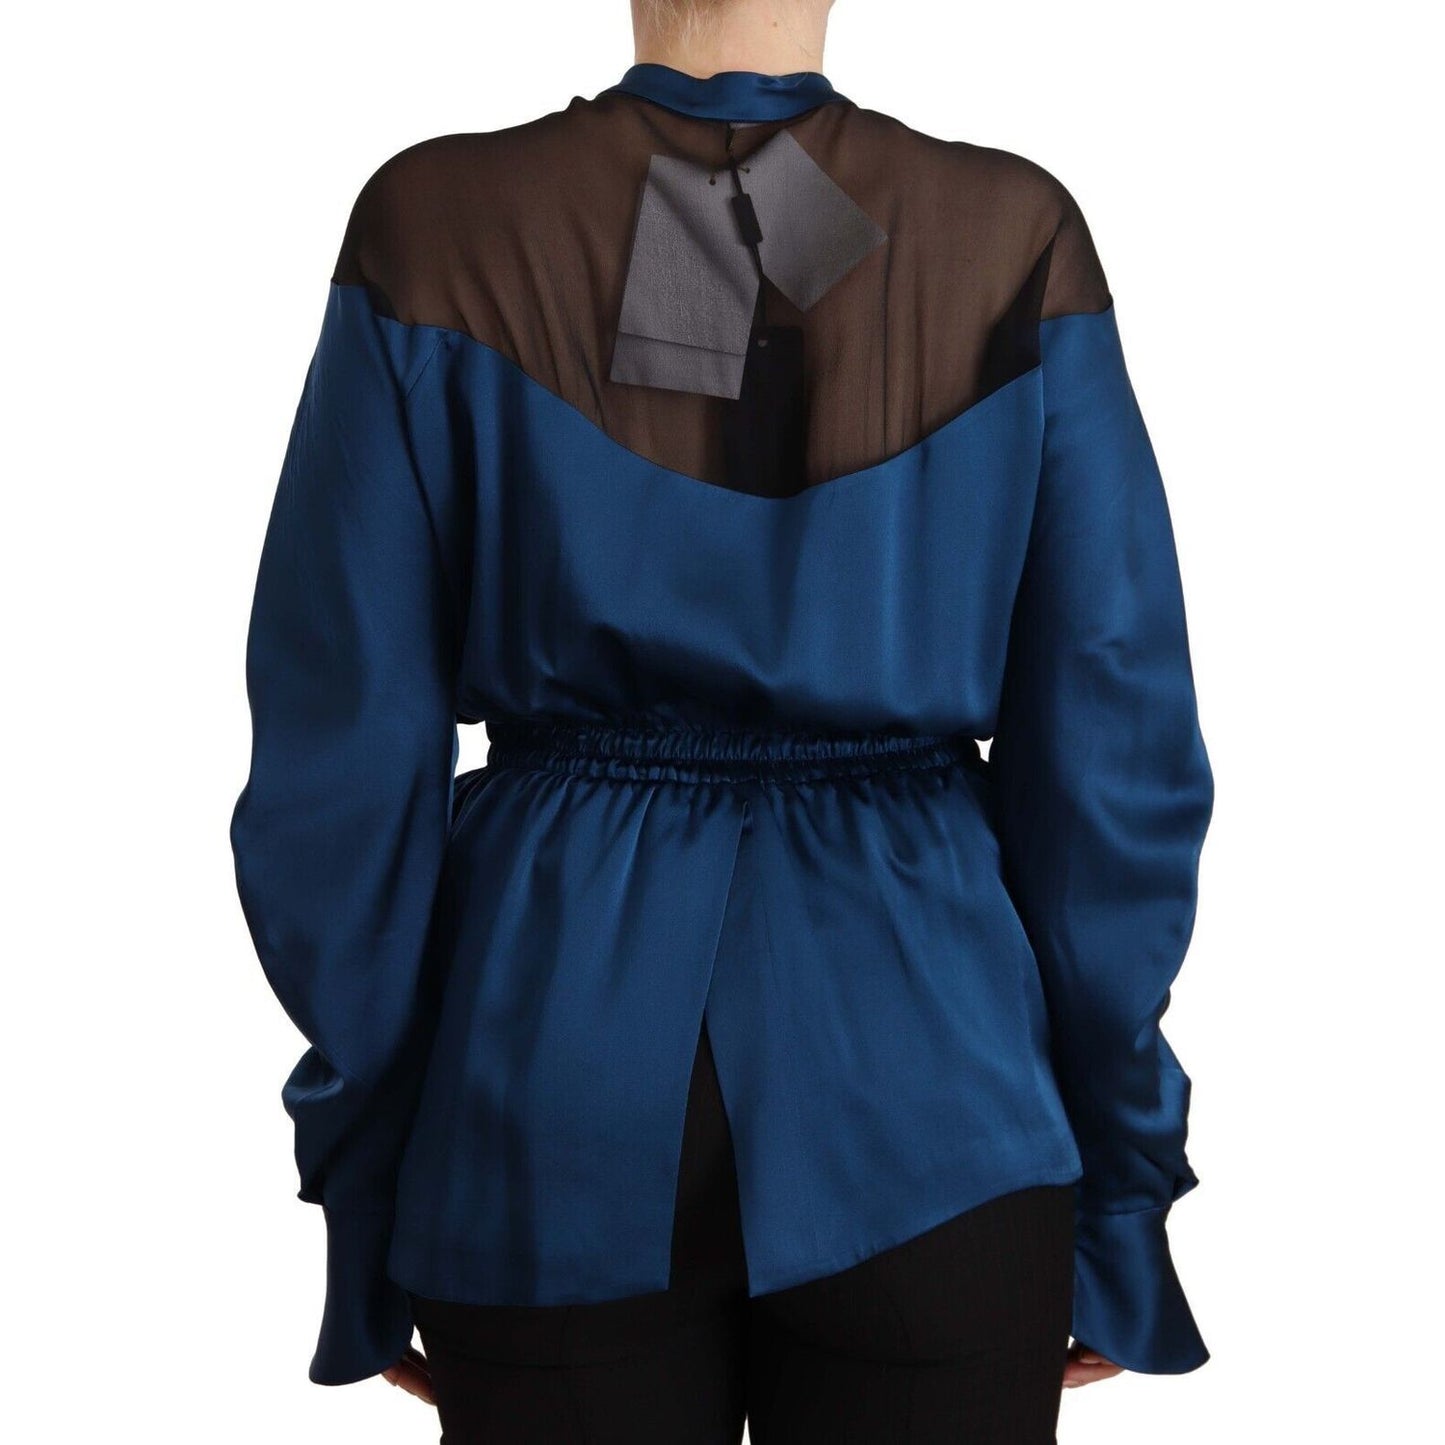 Masha Ma Elegant Crew Neck Silk Blouse in Blue WOMAN TOPS AND SHIRTS blue-silk-long-sleeves-elastic-waist-top-blouse s-l1600-2-28-40c13803-ae7.jpg